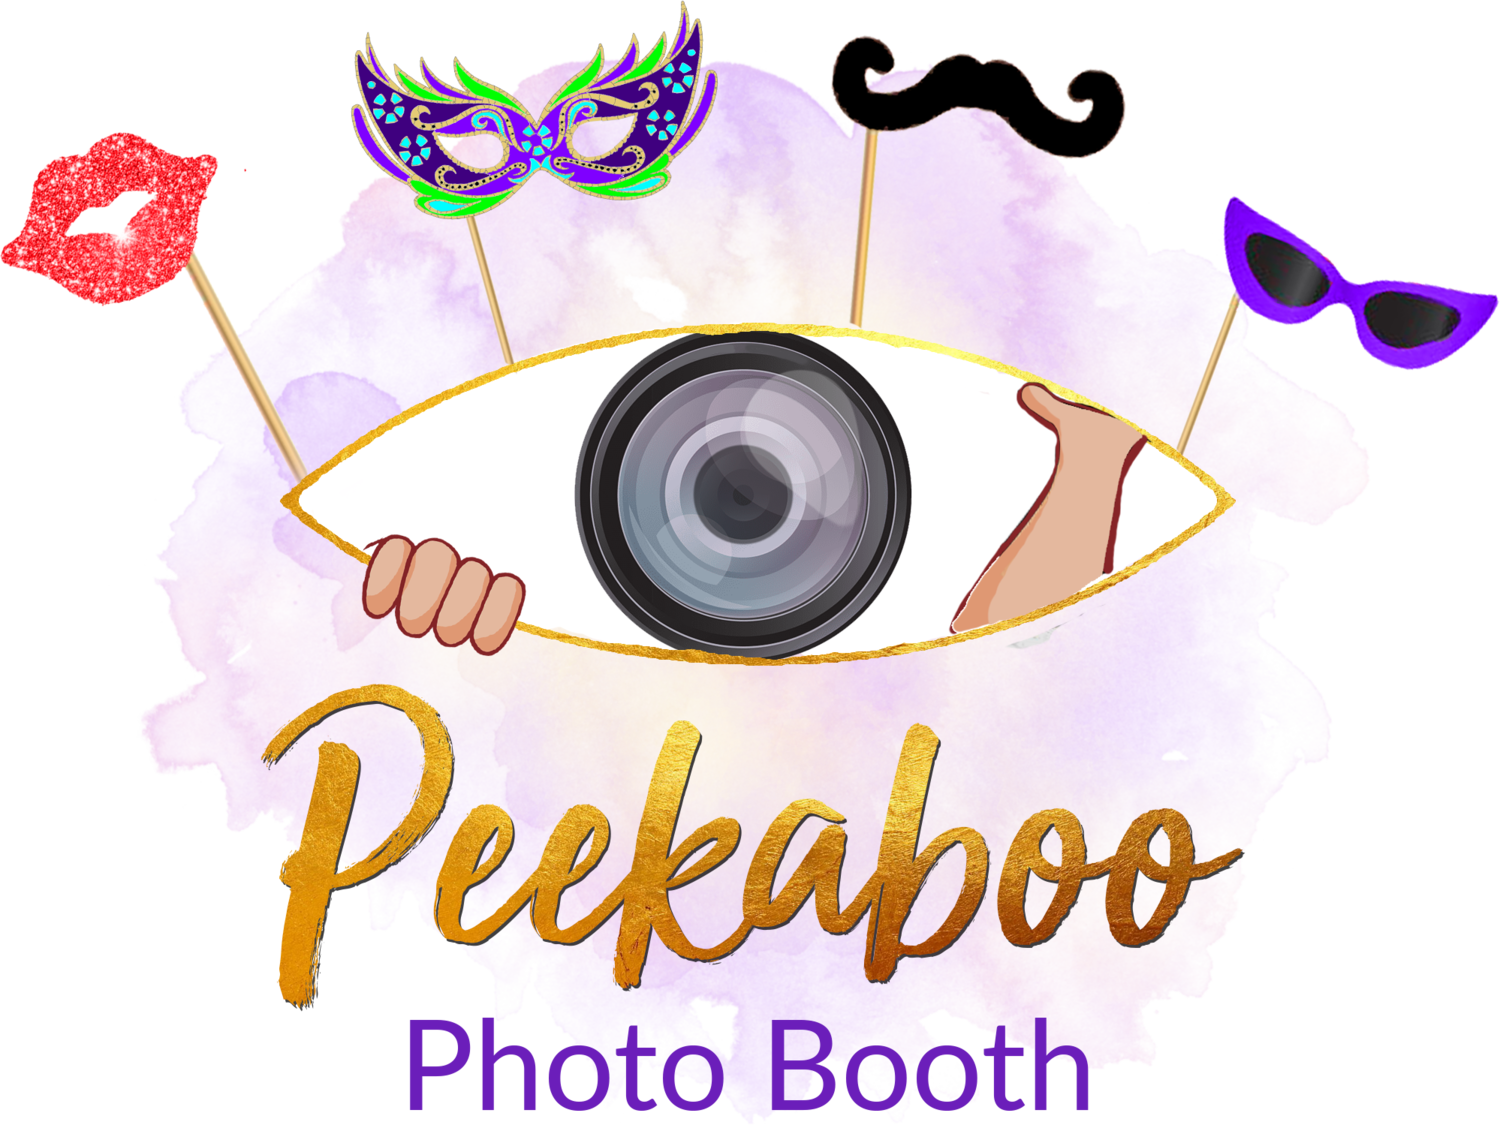 Peekaboo Booth